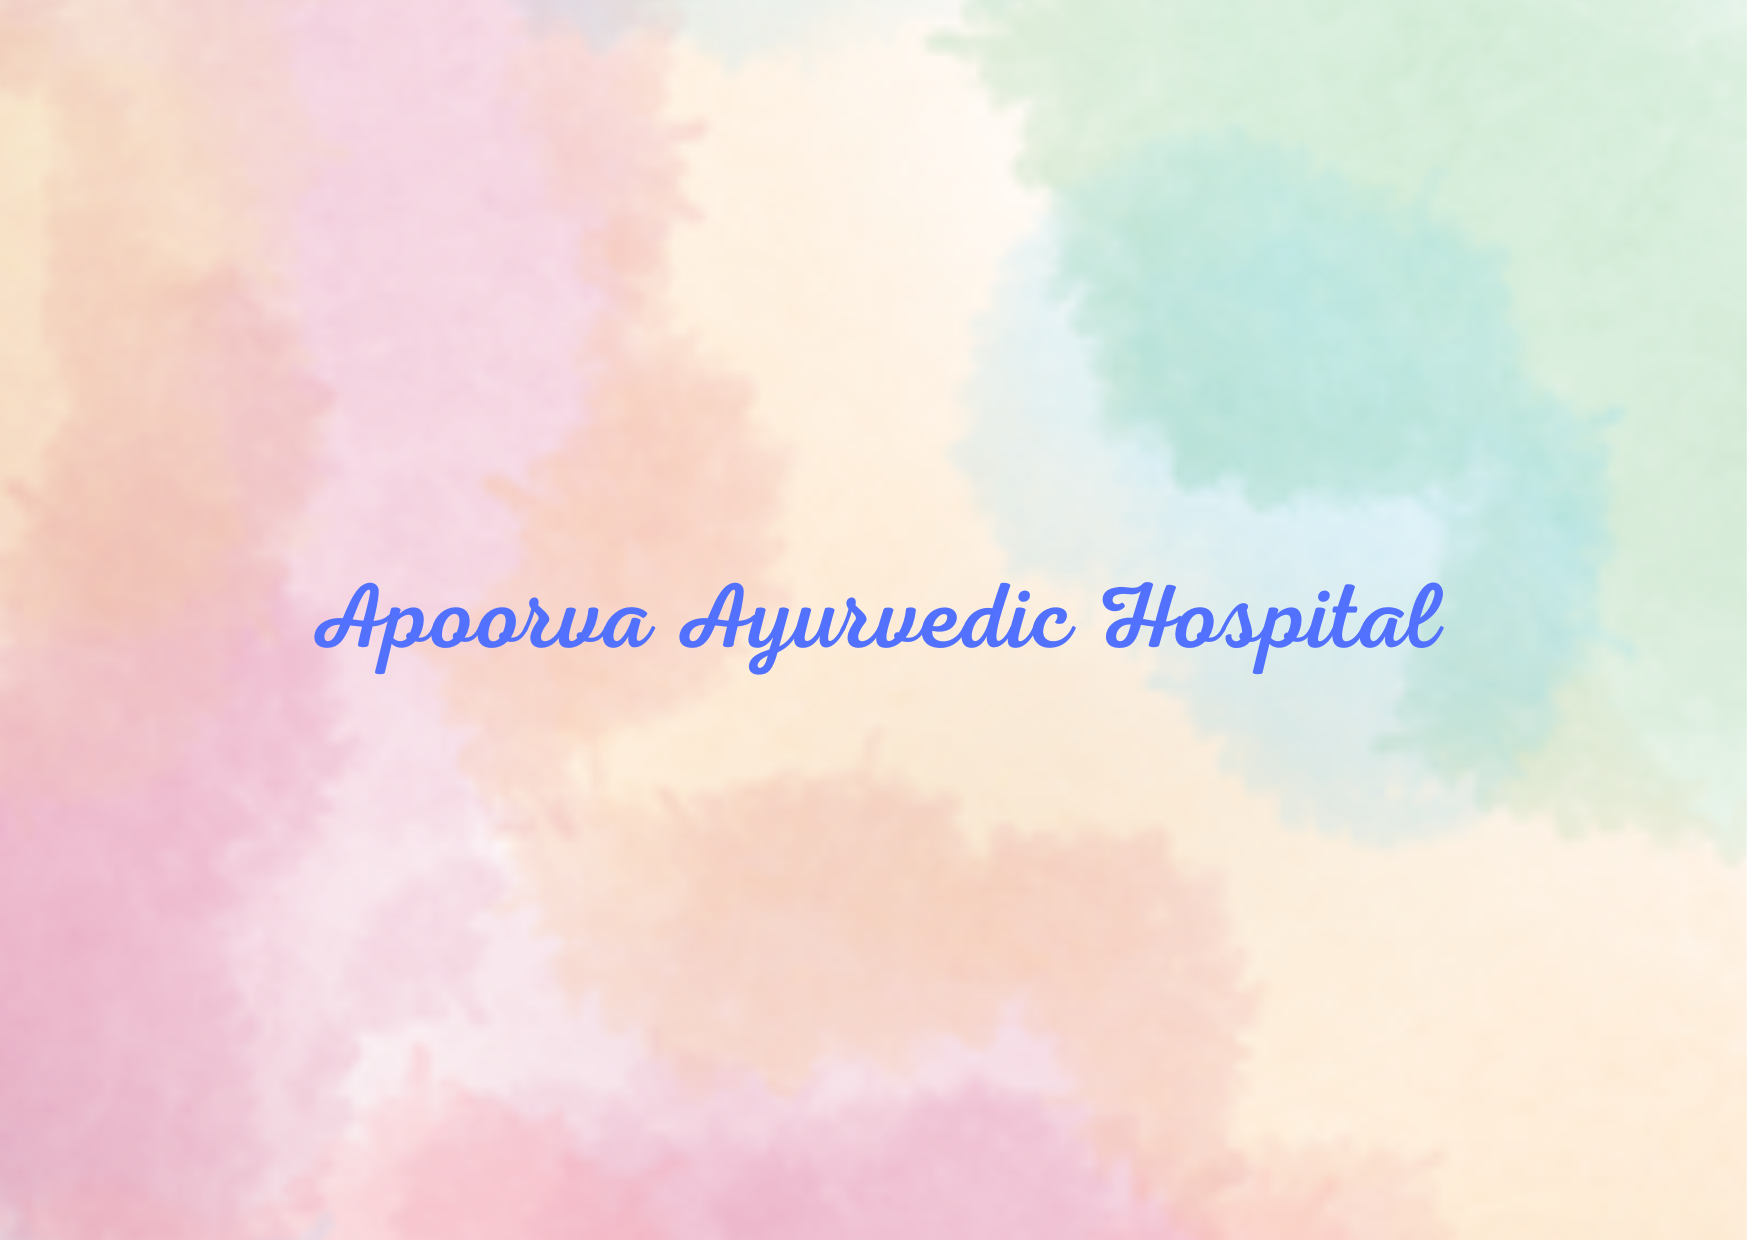 Apoorva Ayurvedic Hospital  